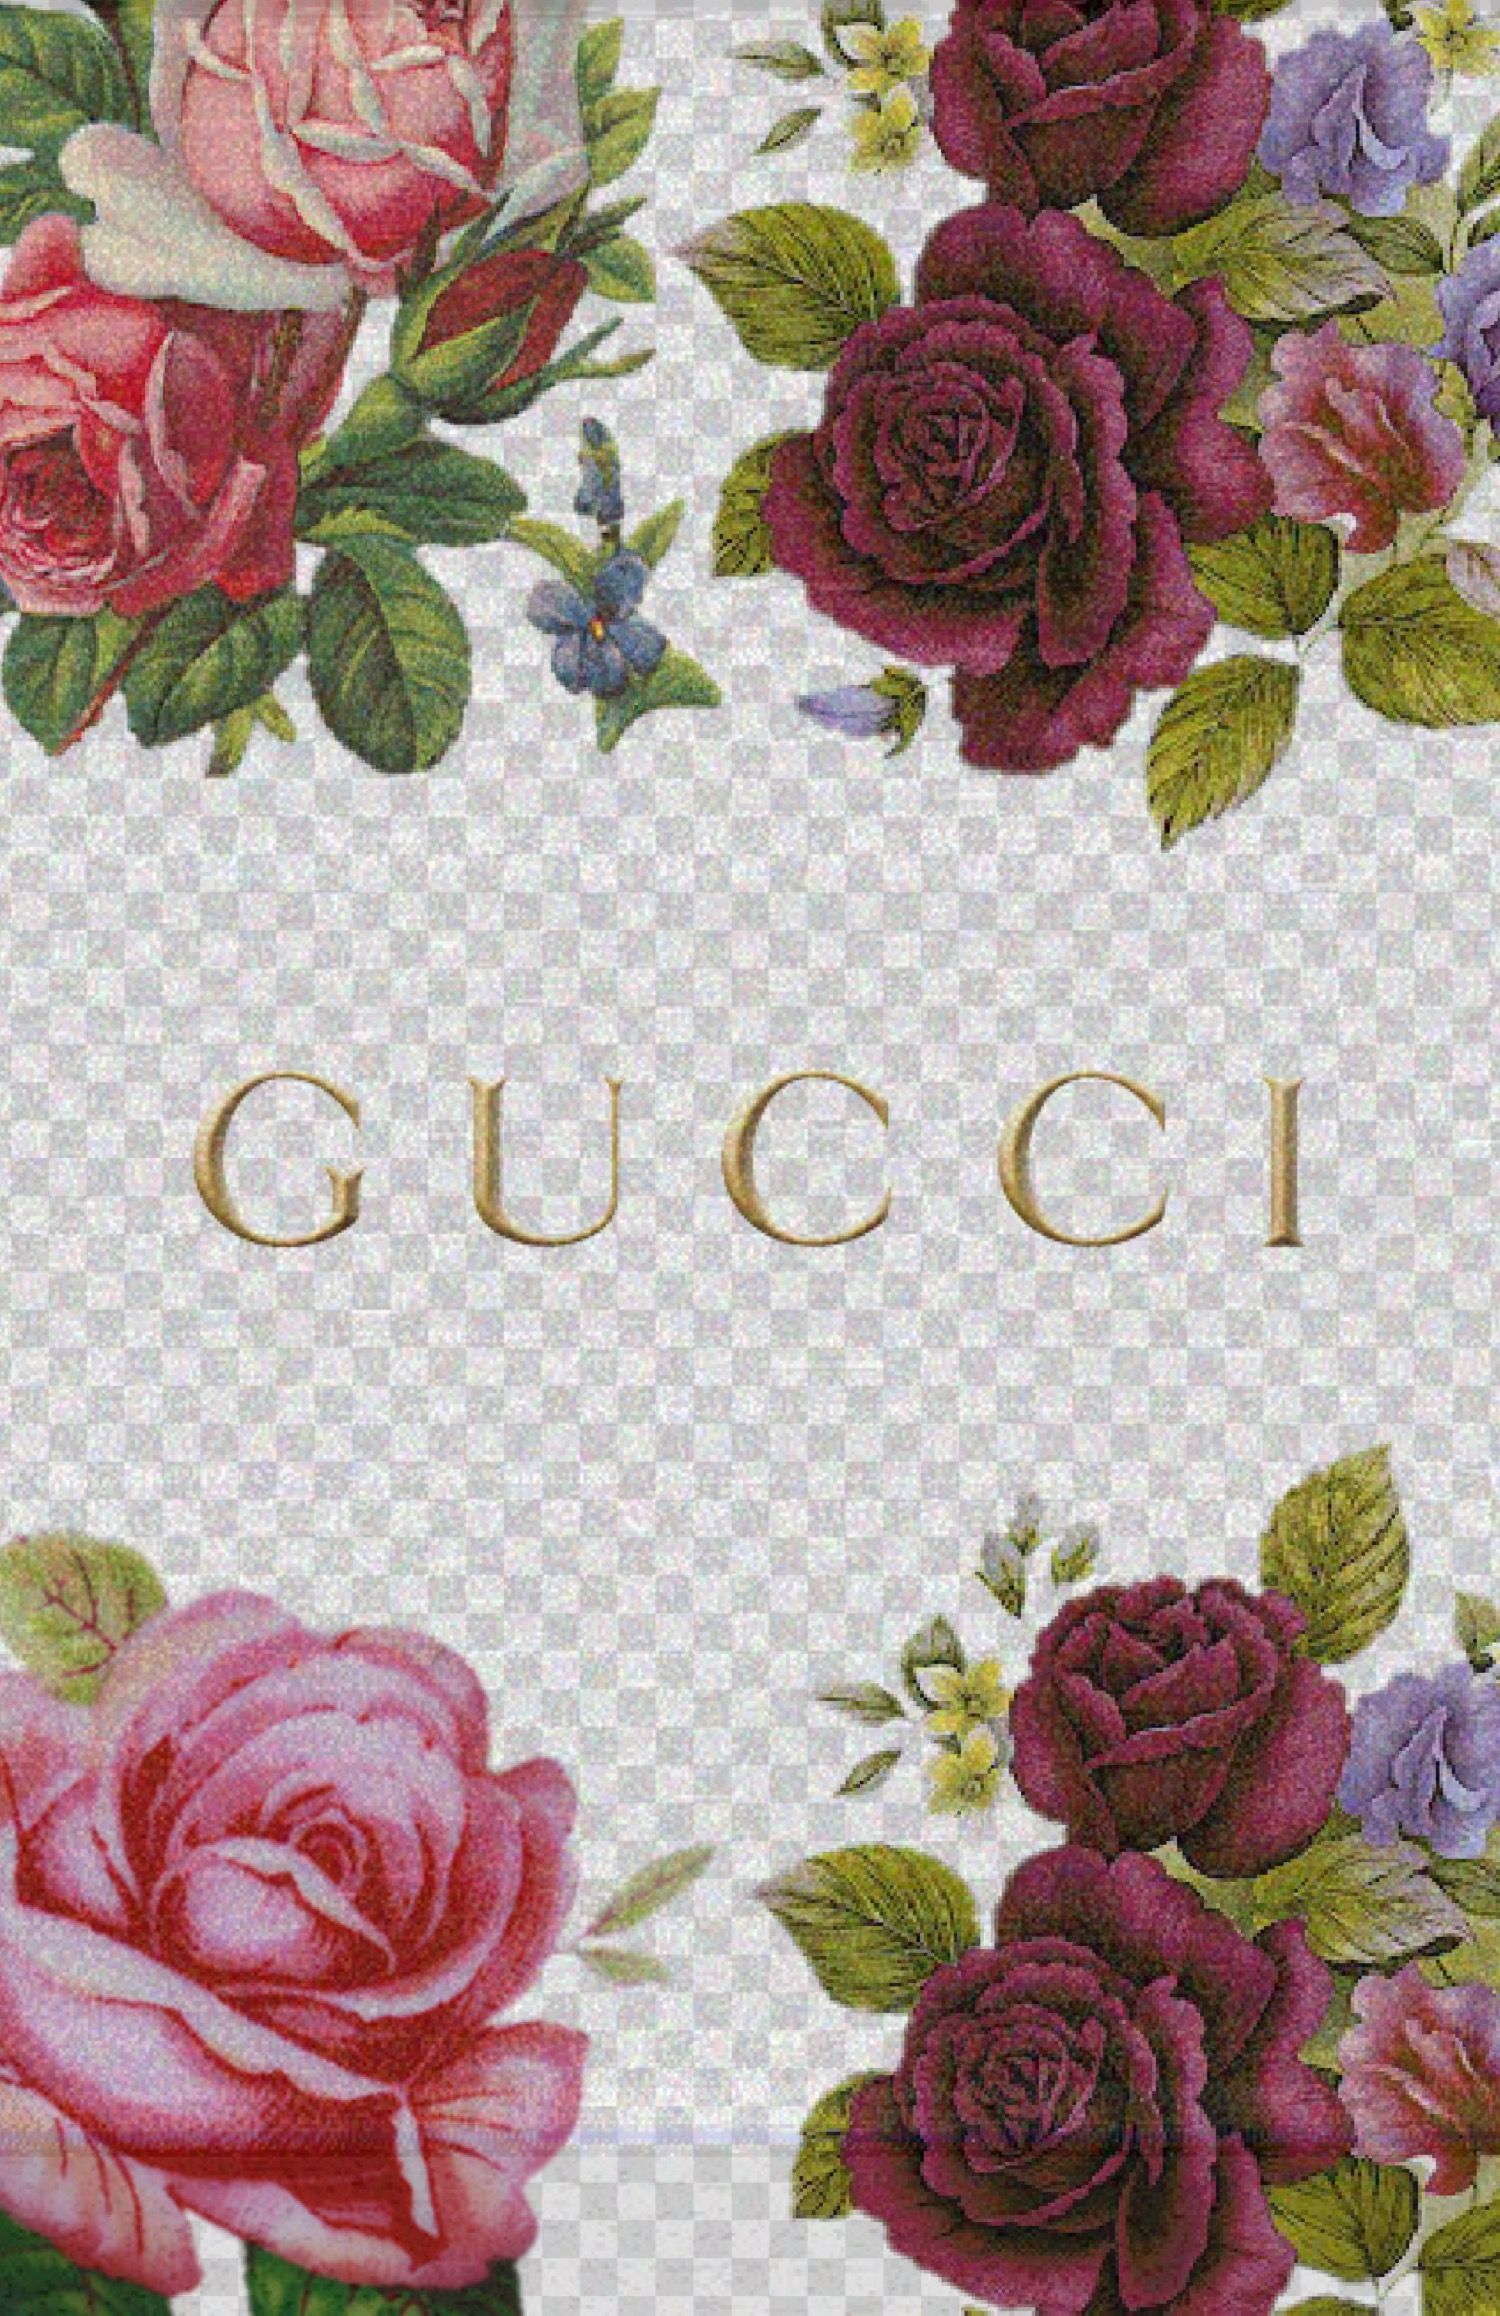 Pink Gucci Wallpaper  Wallpaper, Iphone background, Lock screen backgrounds